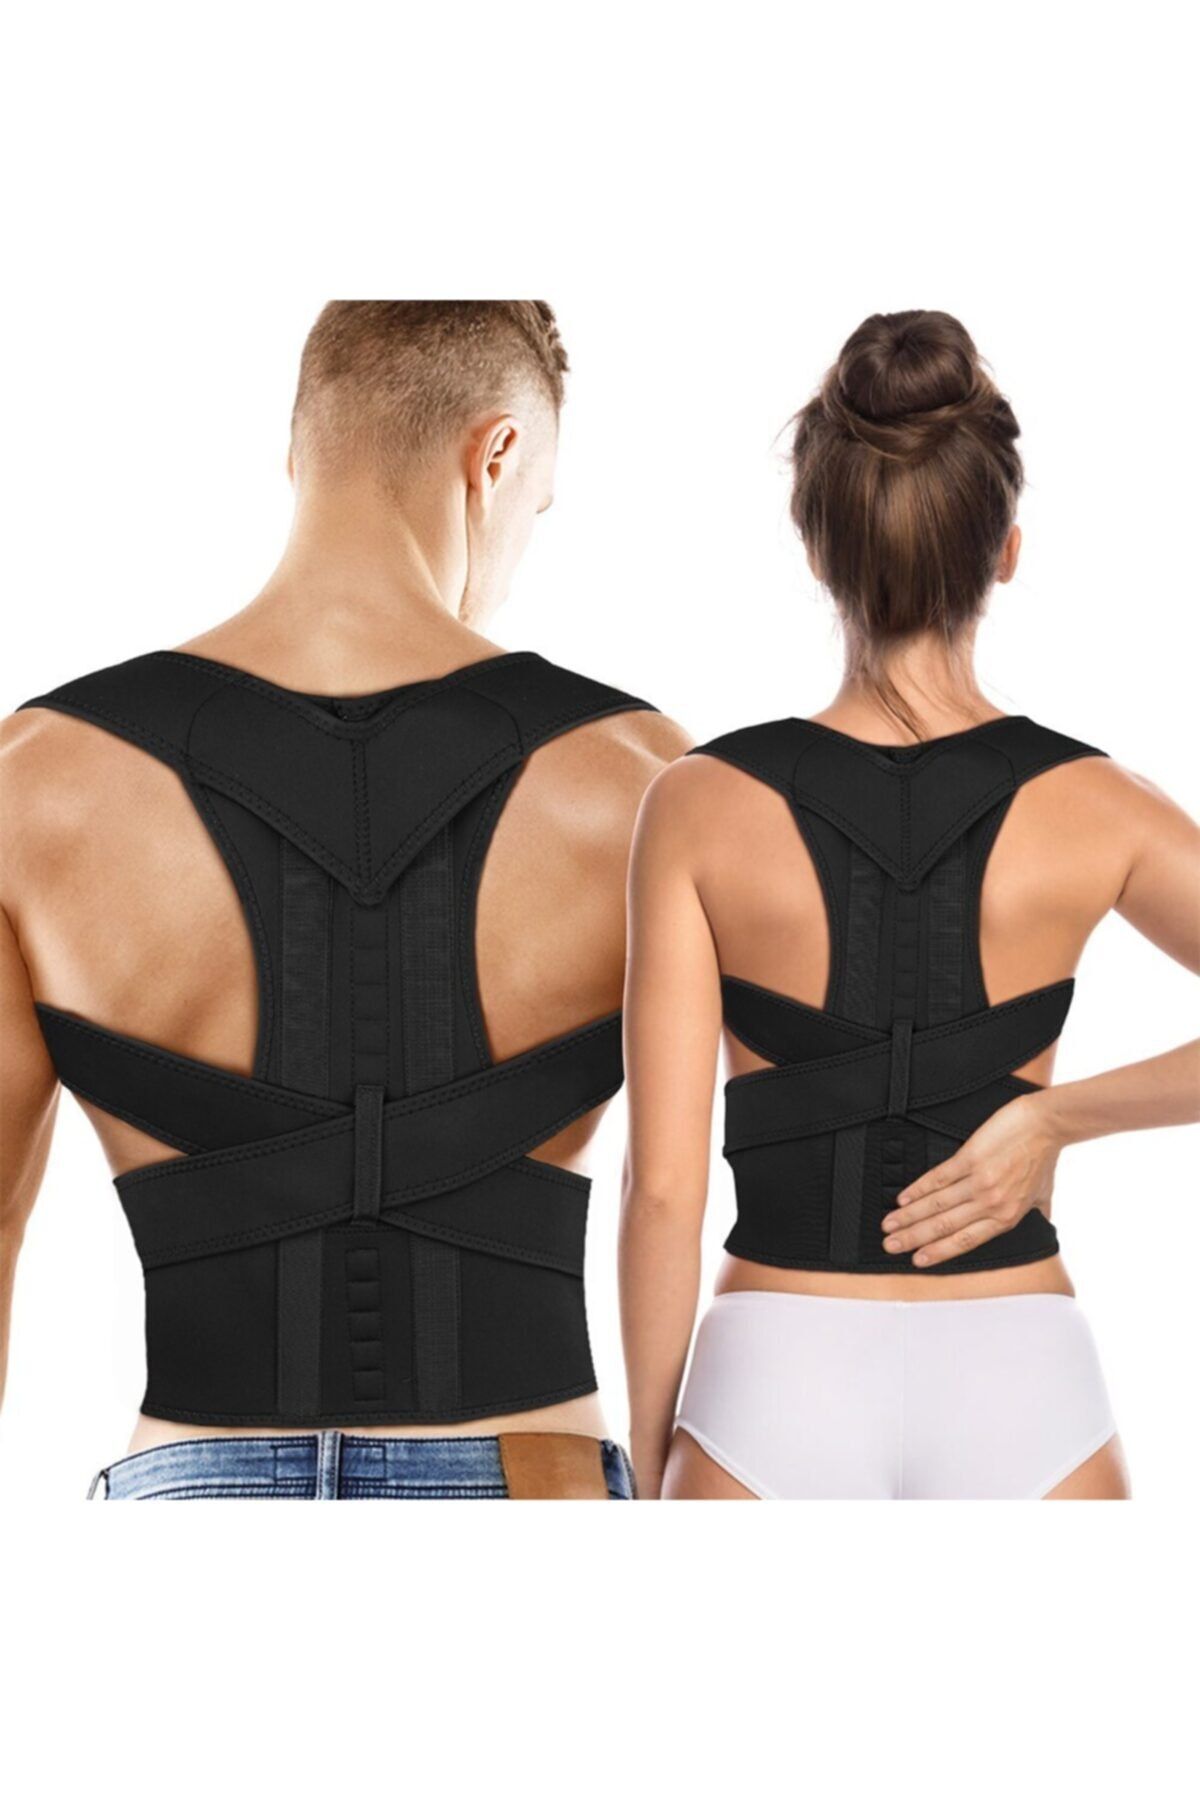 Ankaflex Orthopedic Upright Posture Corset for Women and Men Anti-Hunchback  Vest Belt to Help Stand Upright - Trendyol